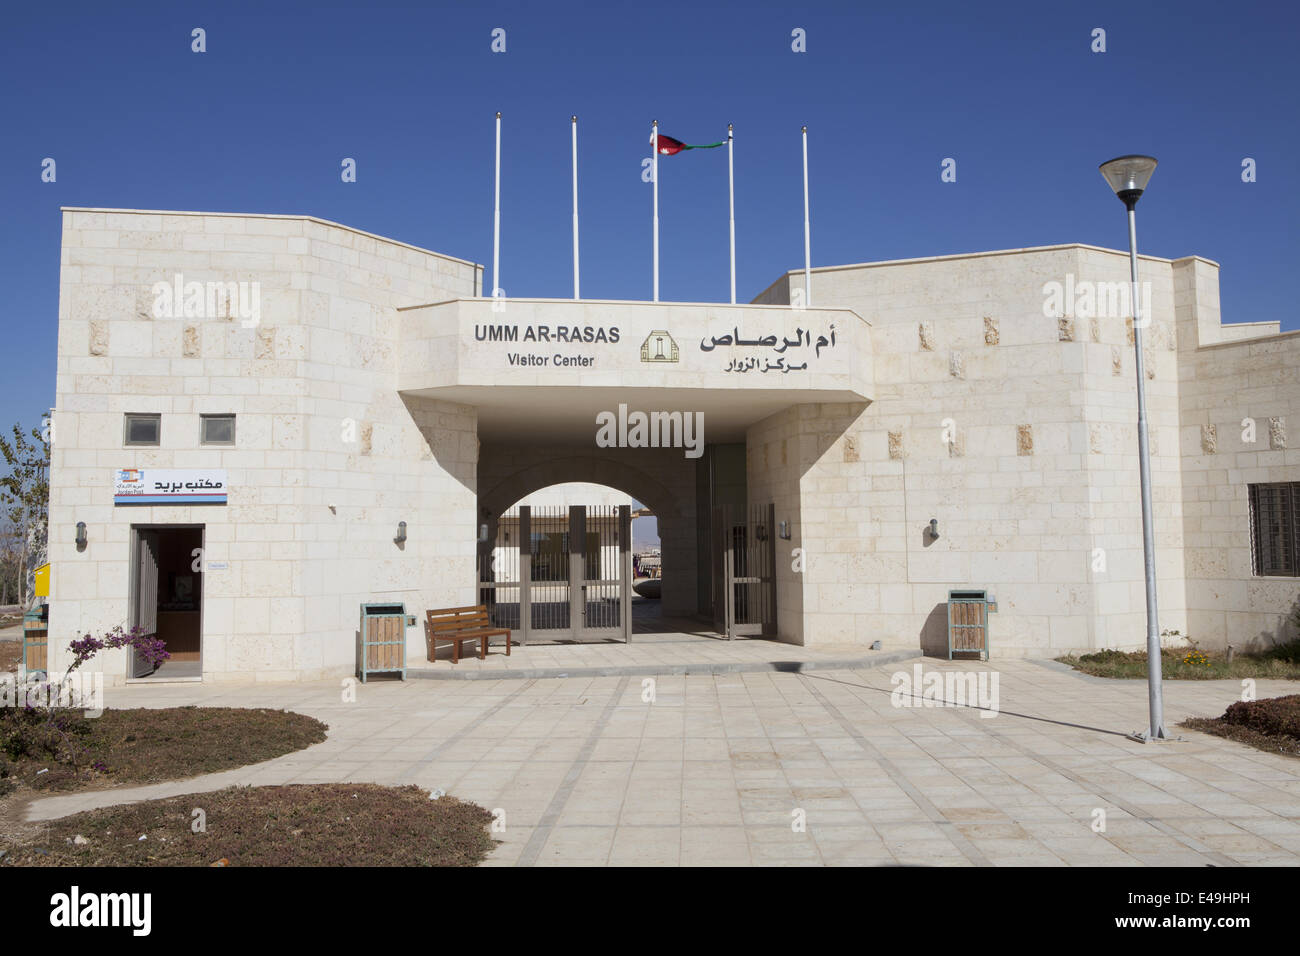 Visitor center, Umm ar-Rasas, Jordan Stock Photo